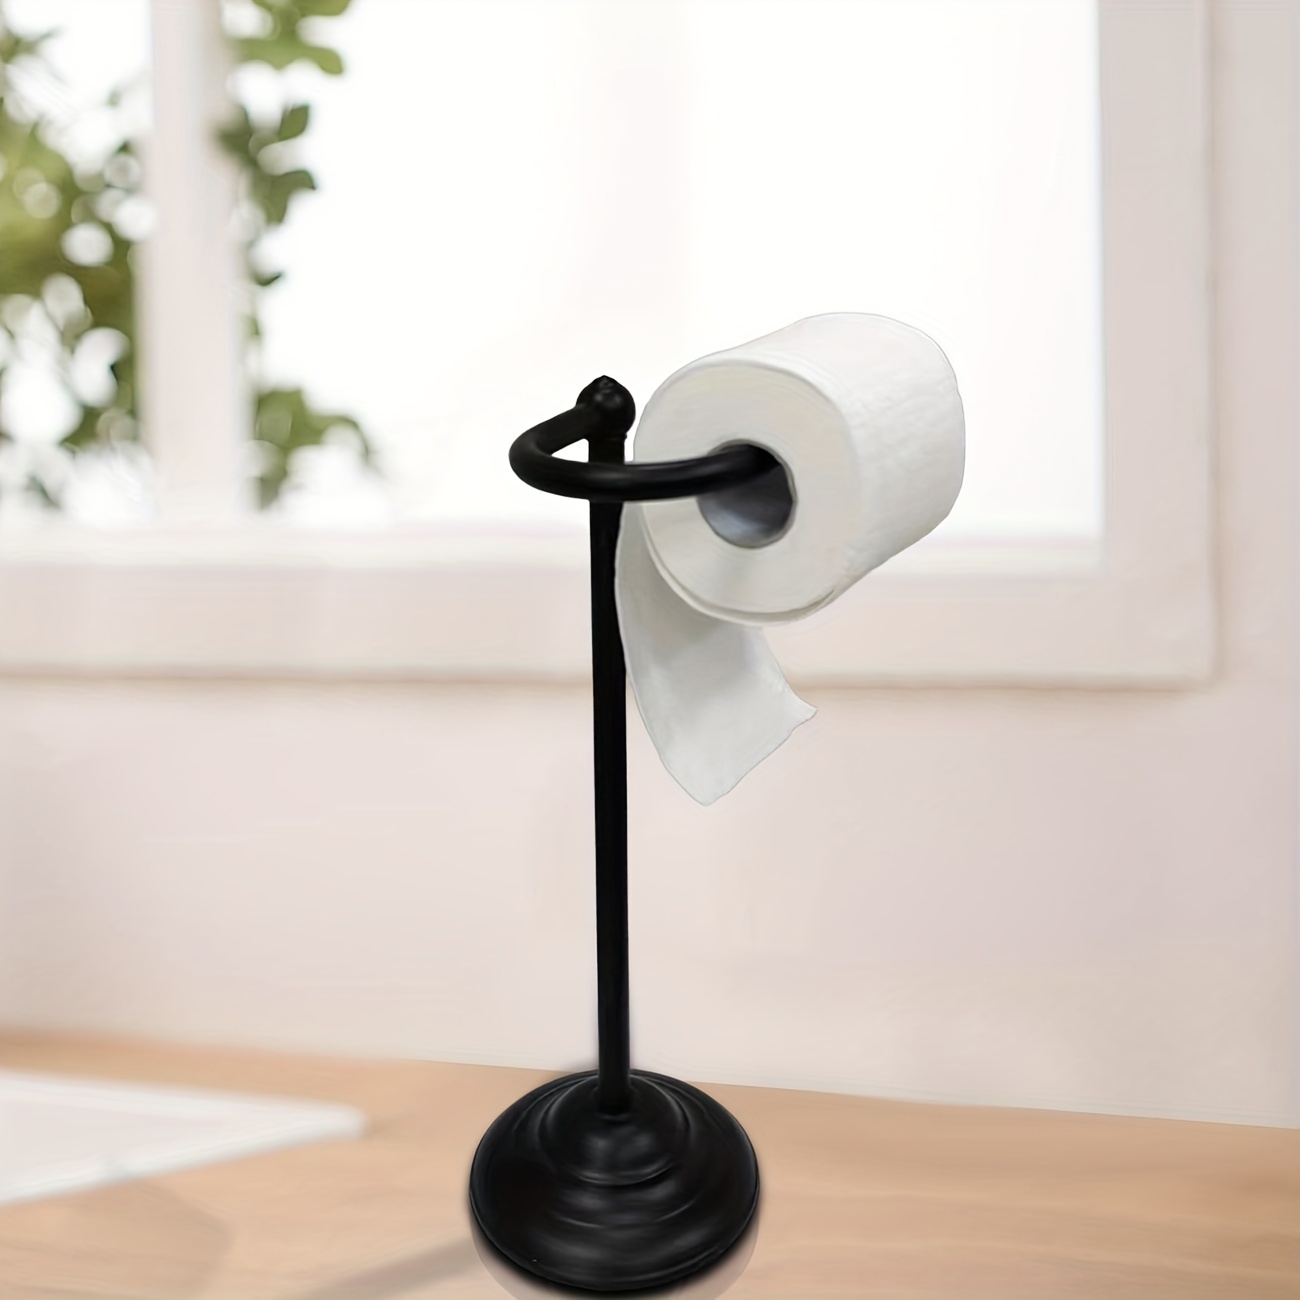 mDesign Over Cabinet Paper Towel Holder with Multi-Purpose Shelf - Bronze